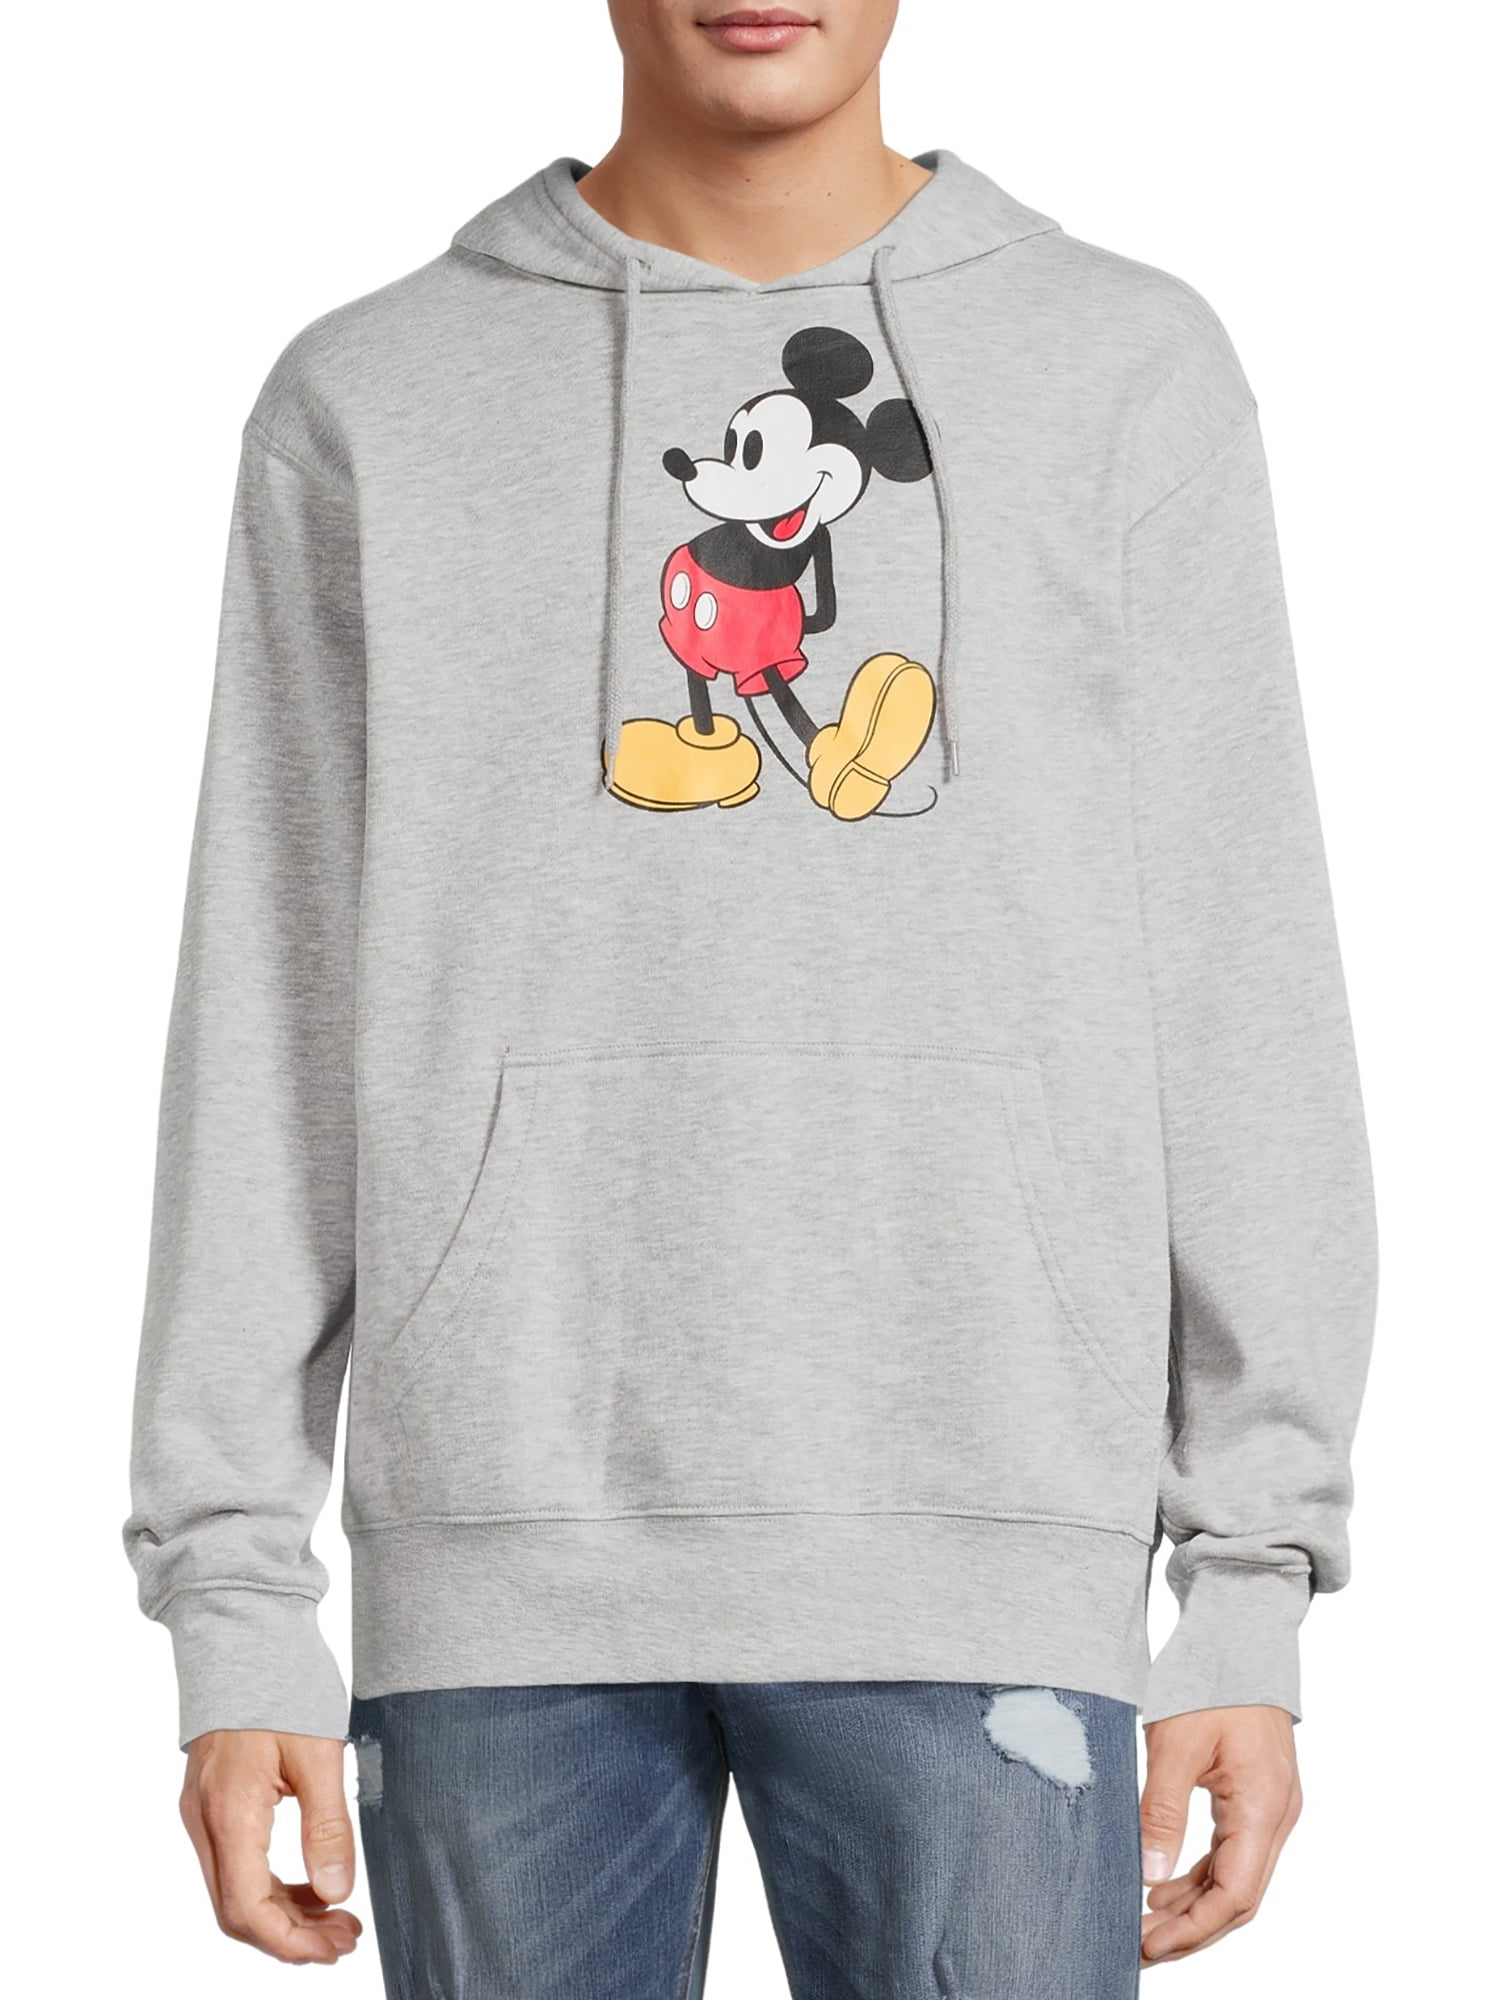 Mickey Mouse Sweatshirt Big Logo Mickey Pullover Jumper Sweater Minnie Crewneck Famous Cartoon Rare!